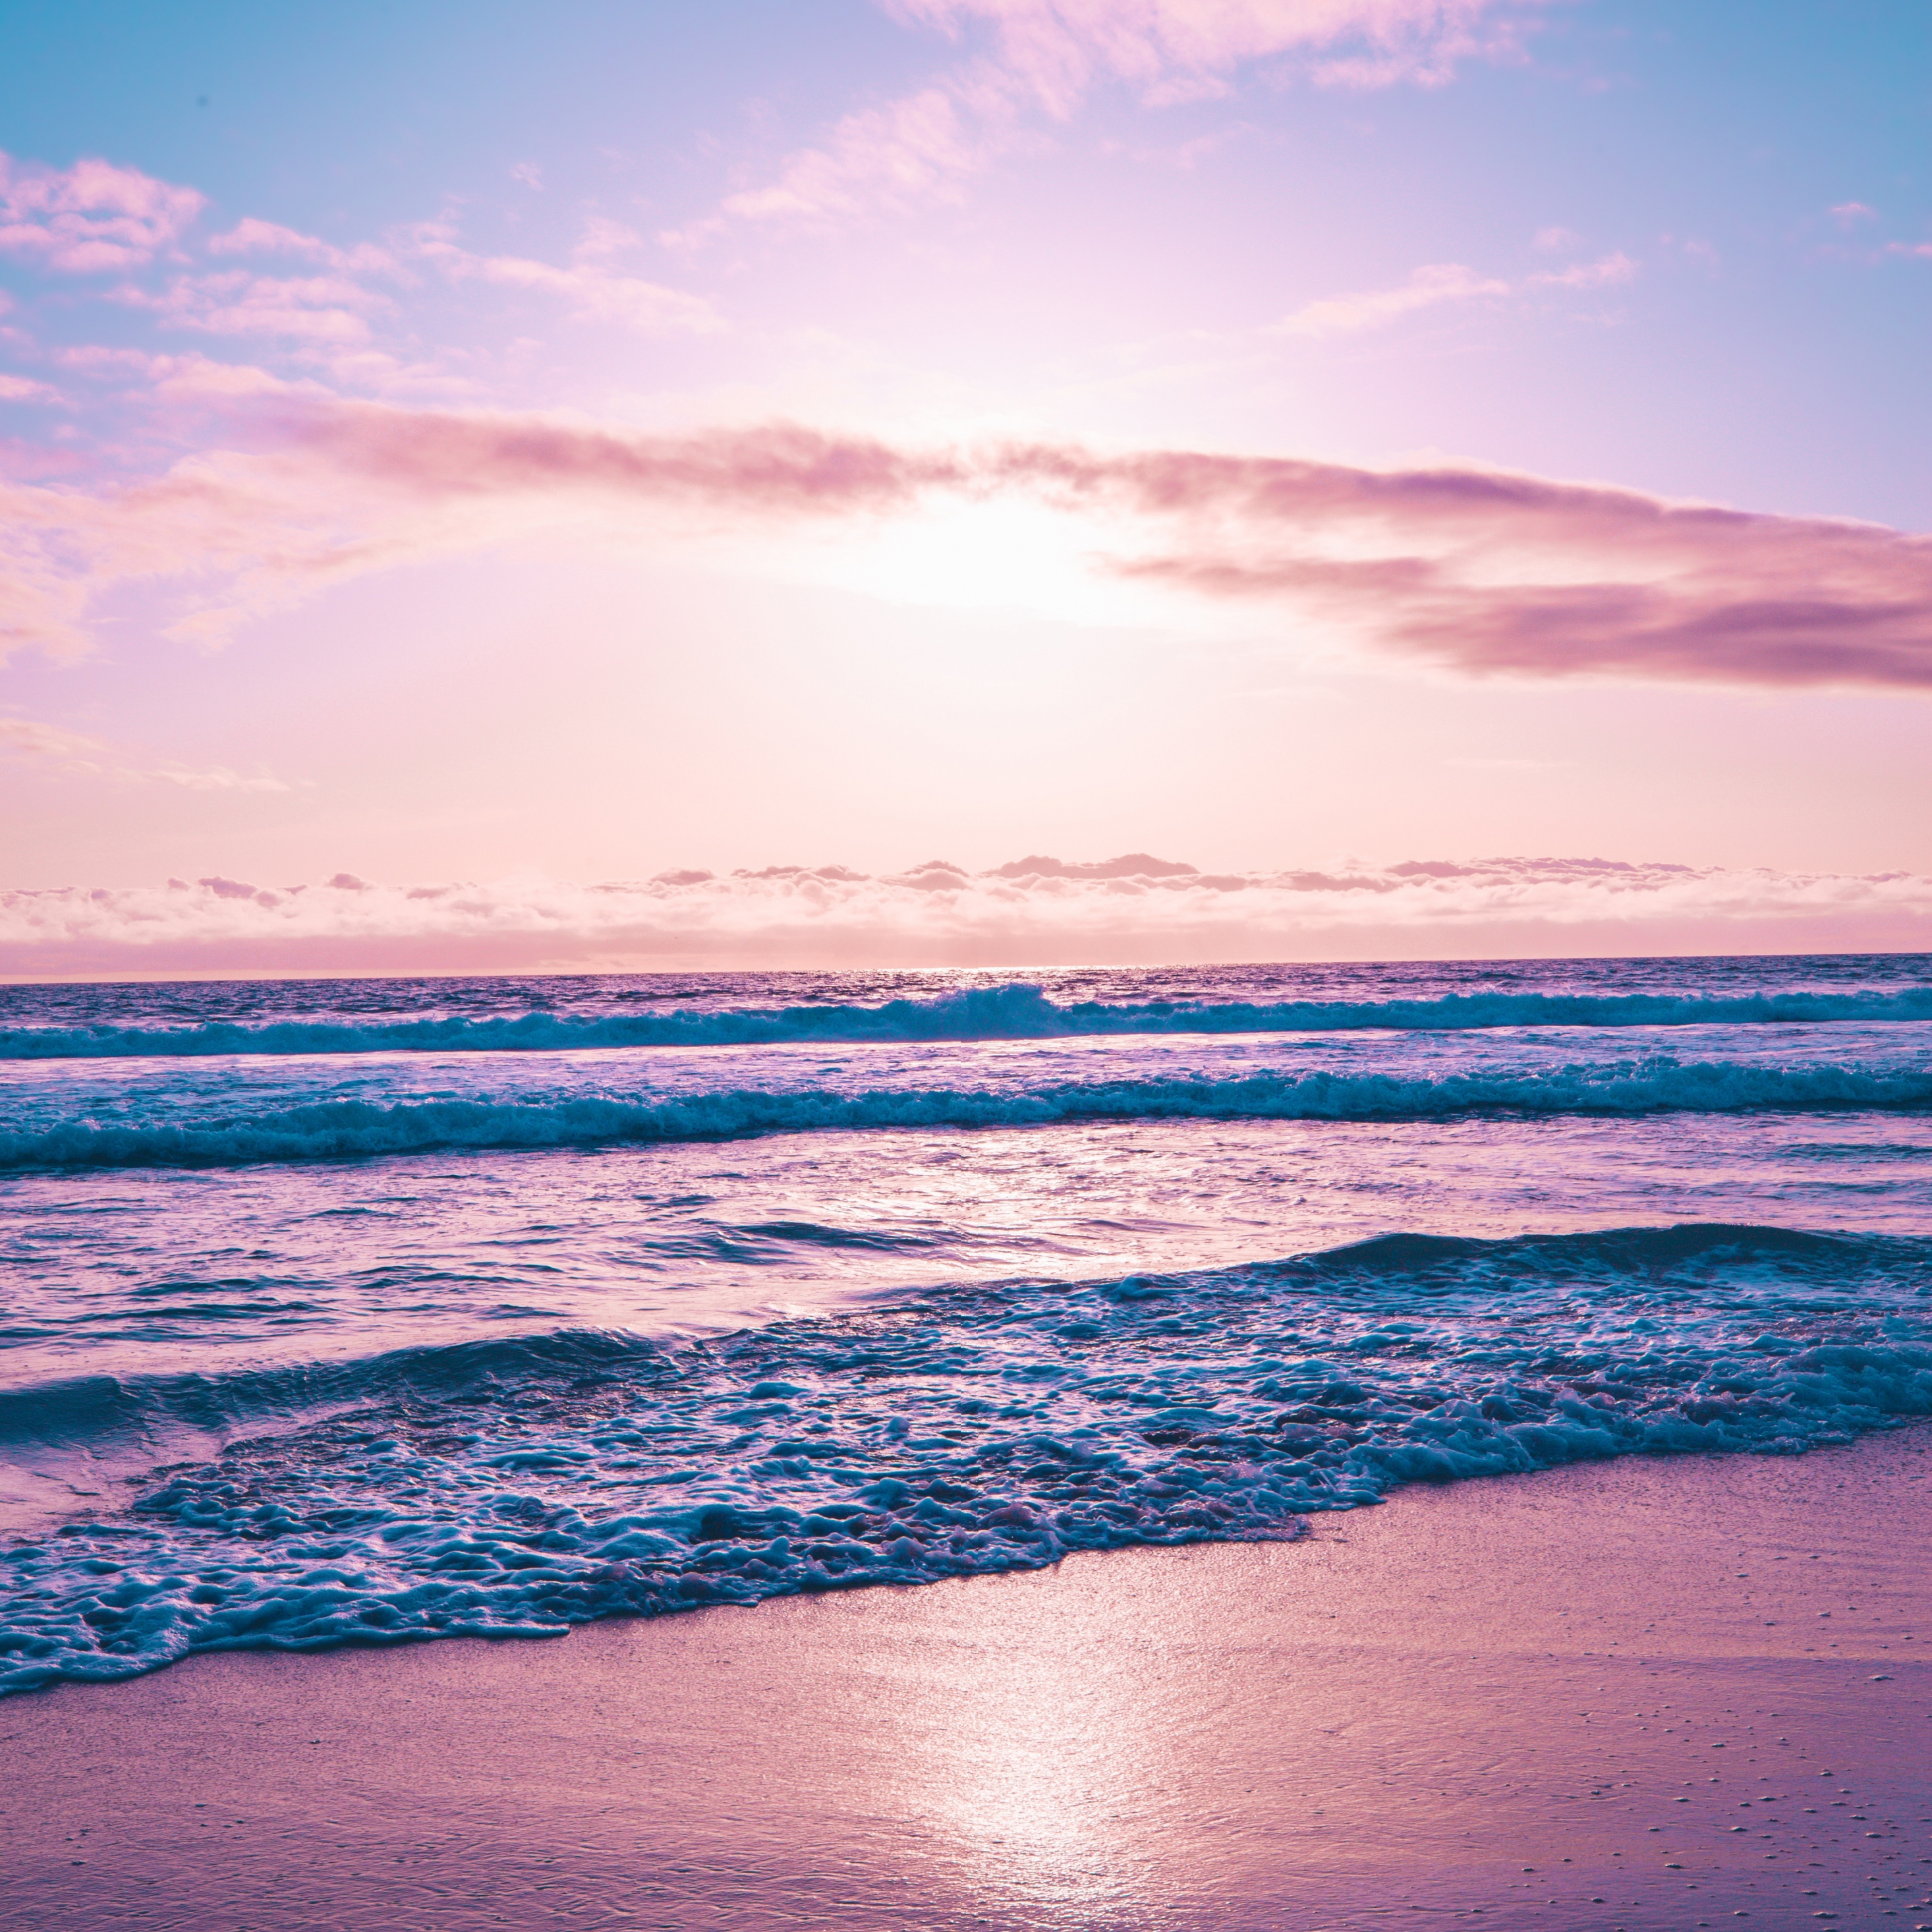 Download 2932x2932 Wallpaper Seashore Sea Waves Sunset Beach